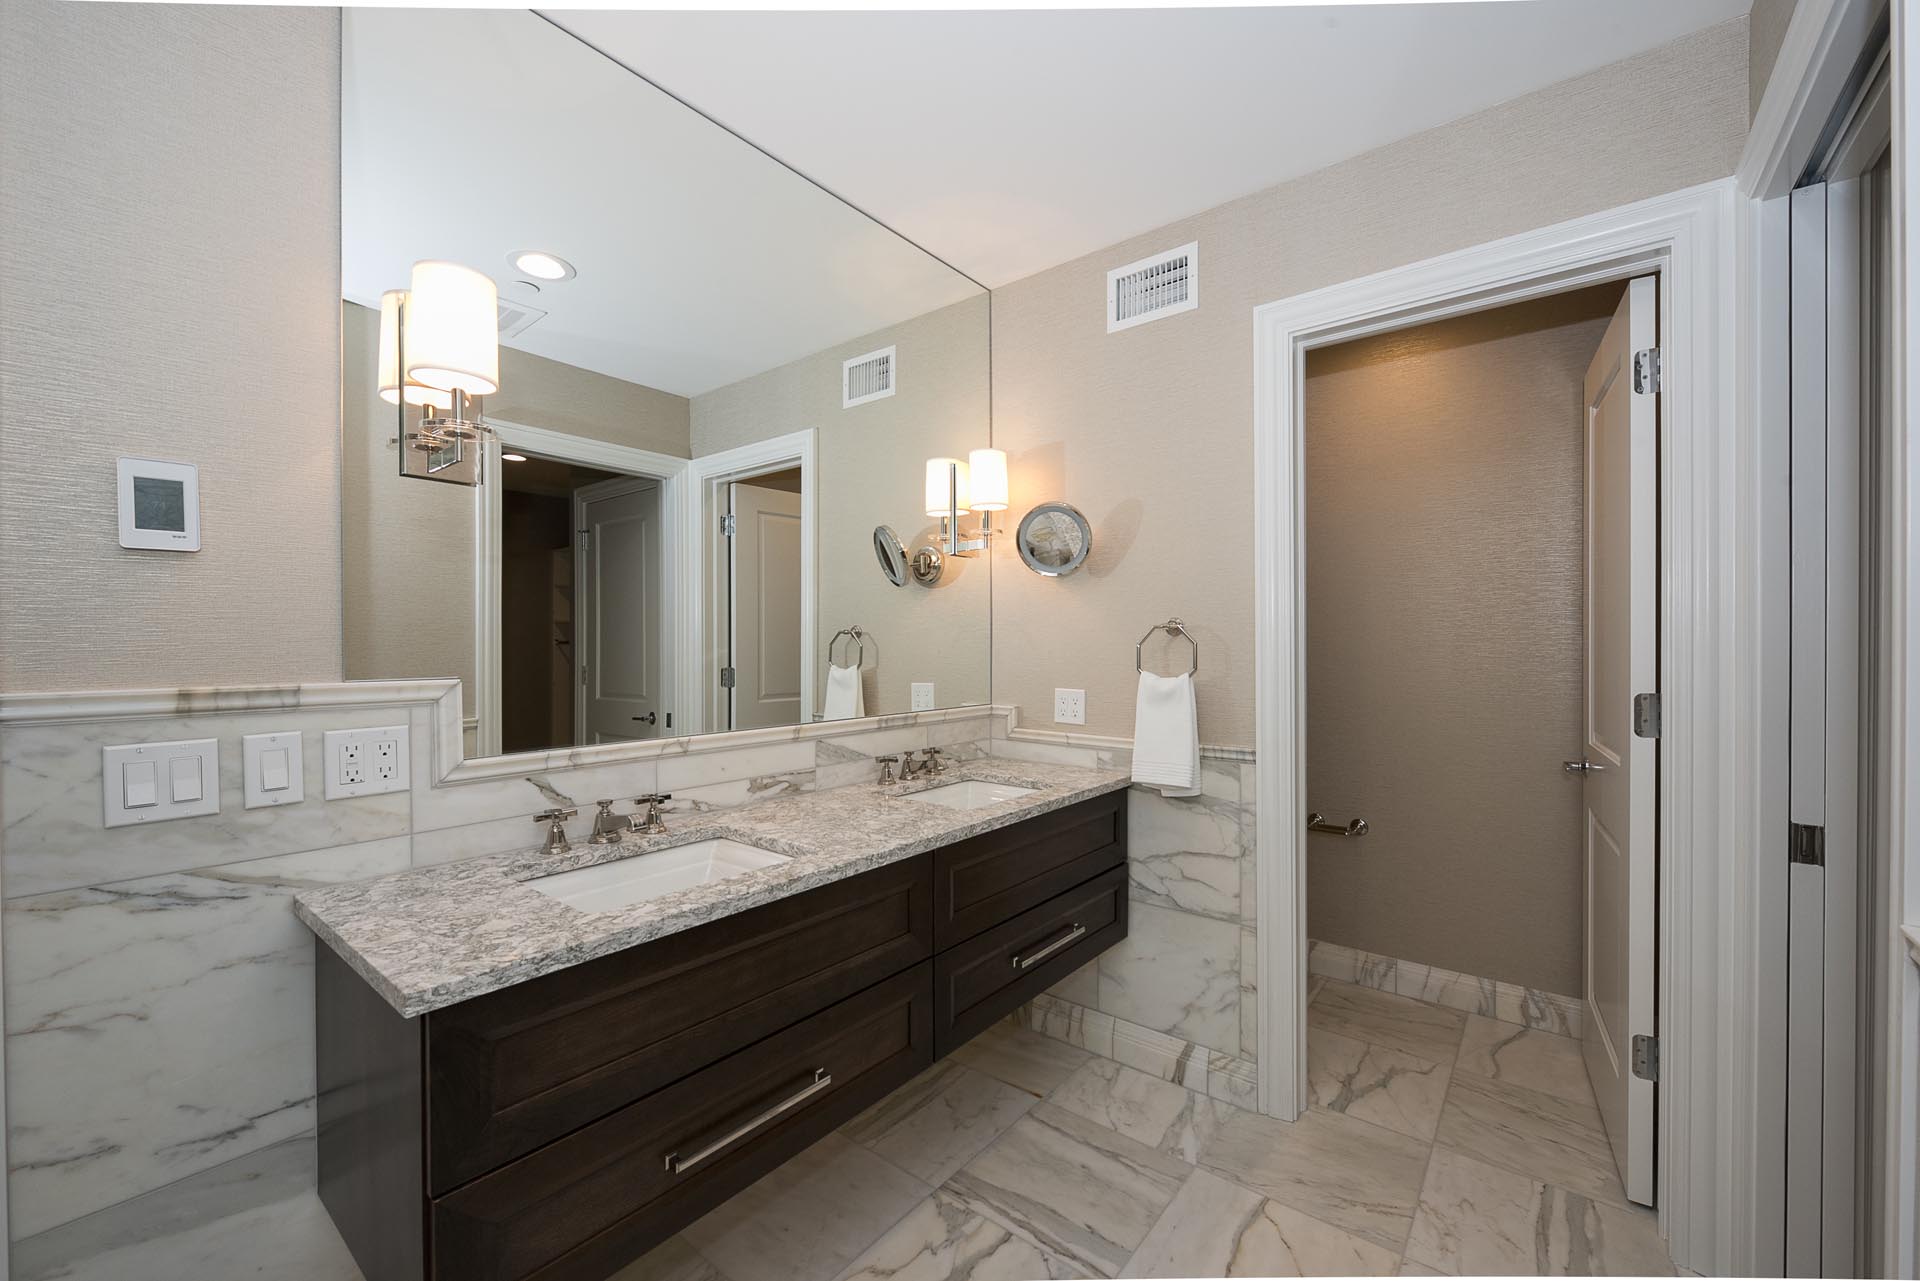 Condo Bathroom Design | H Residence | Midland, MI